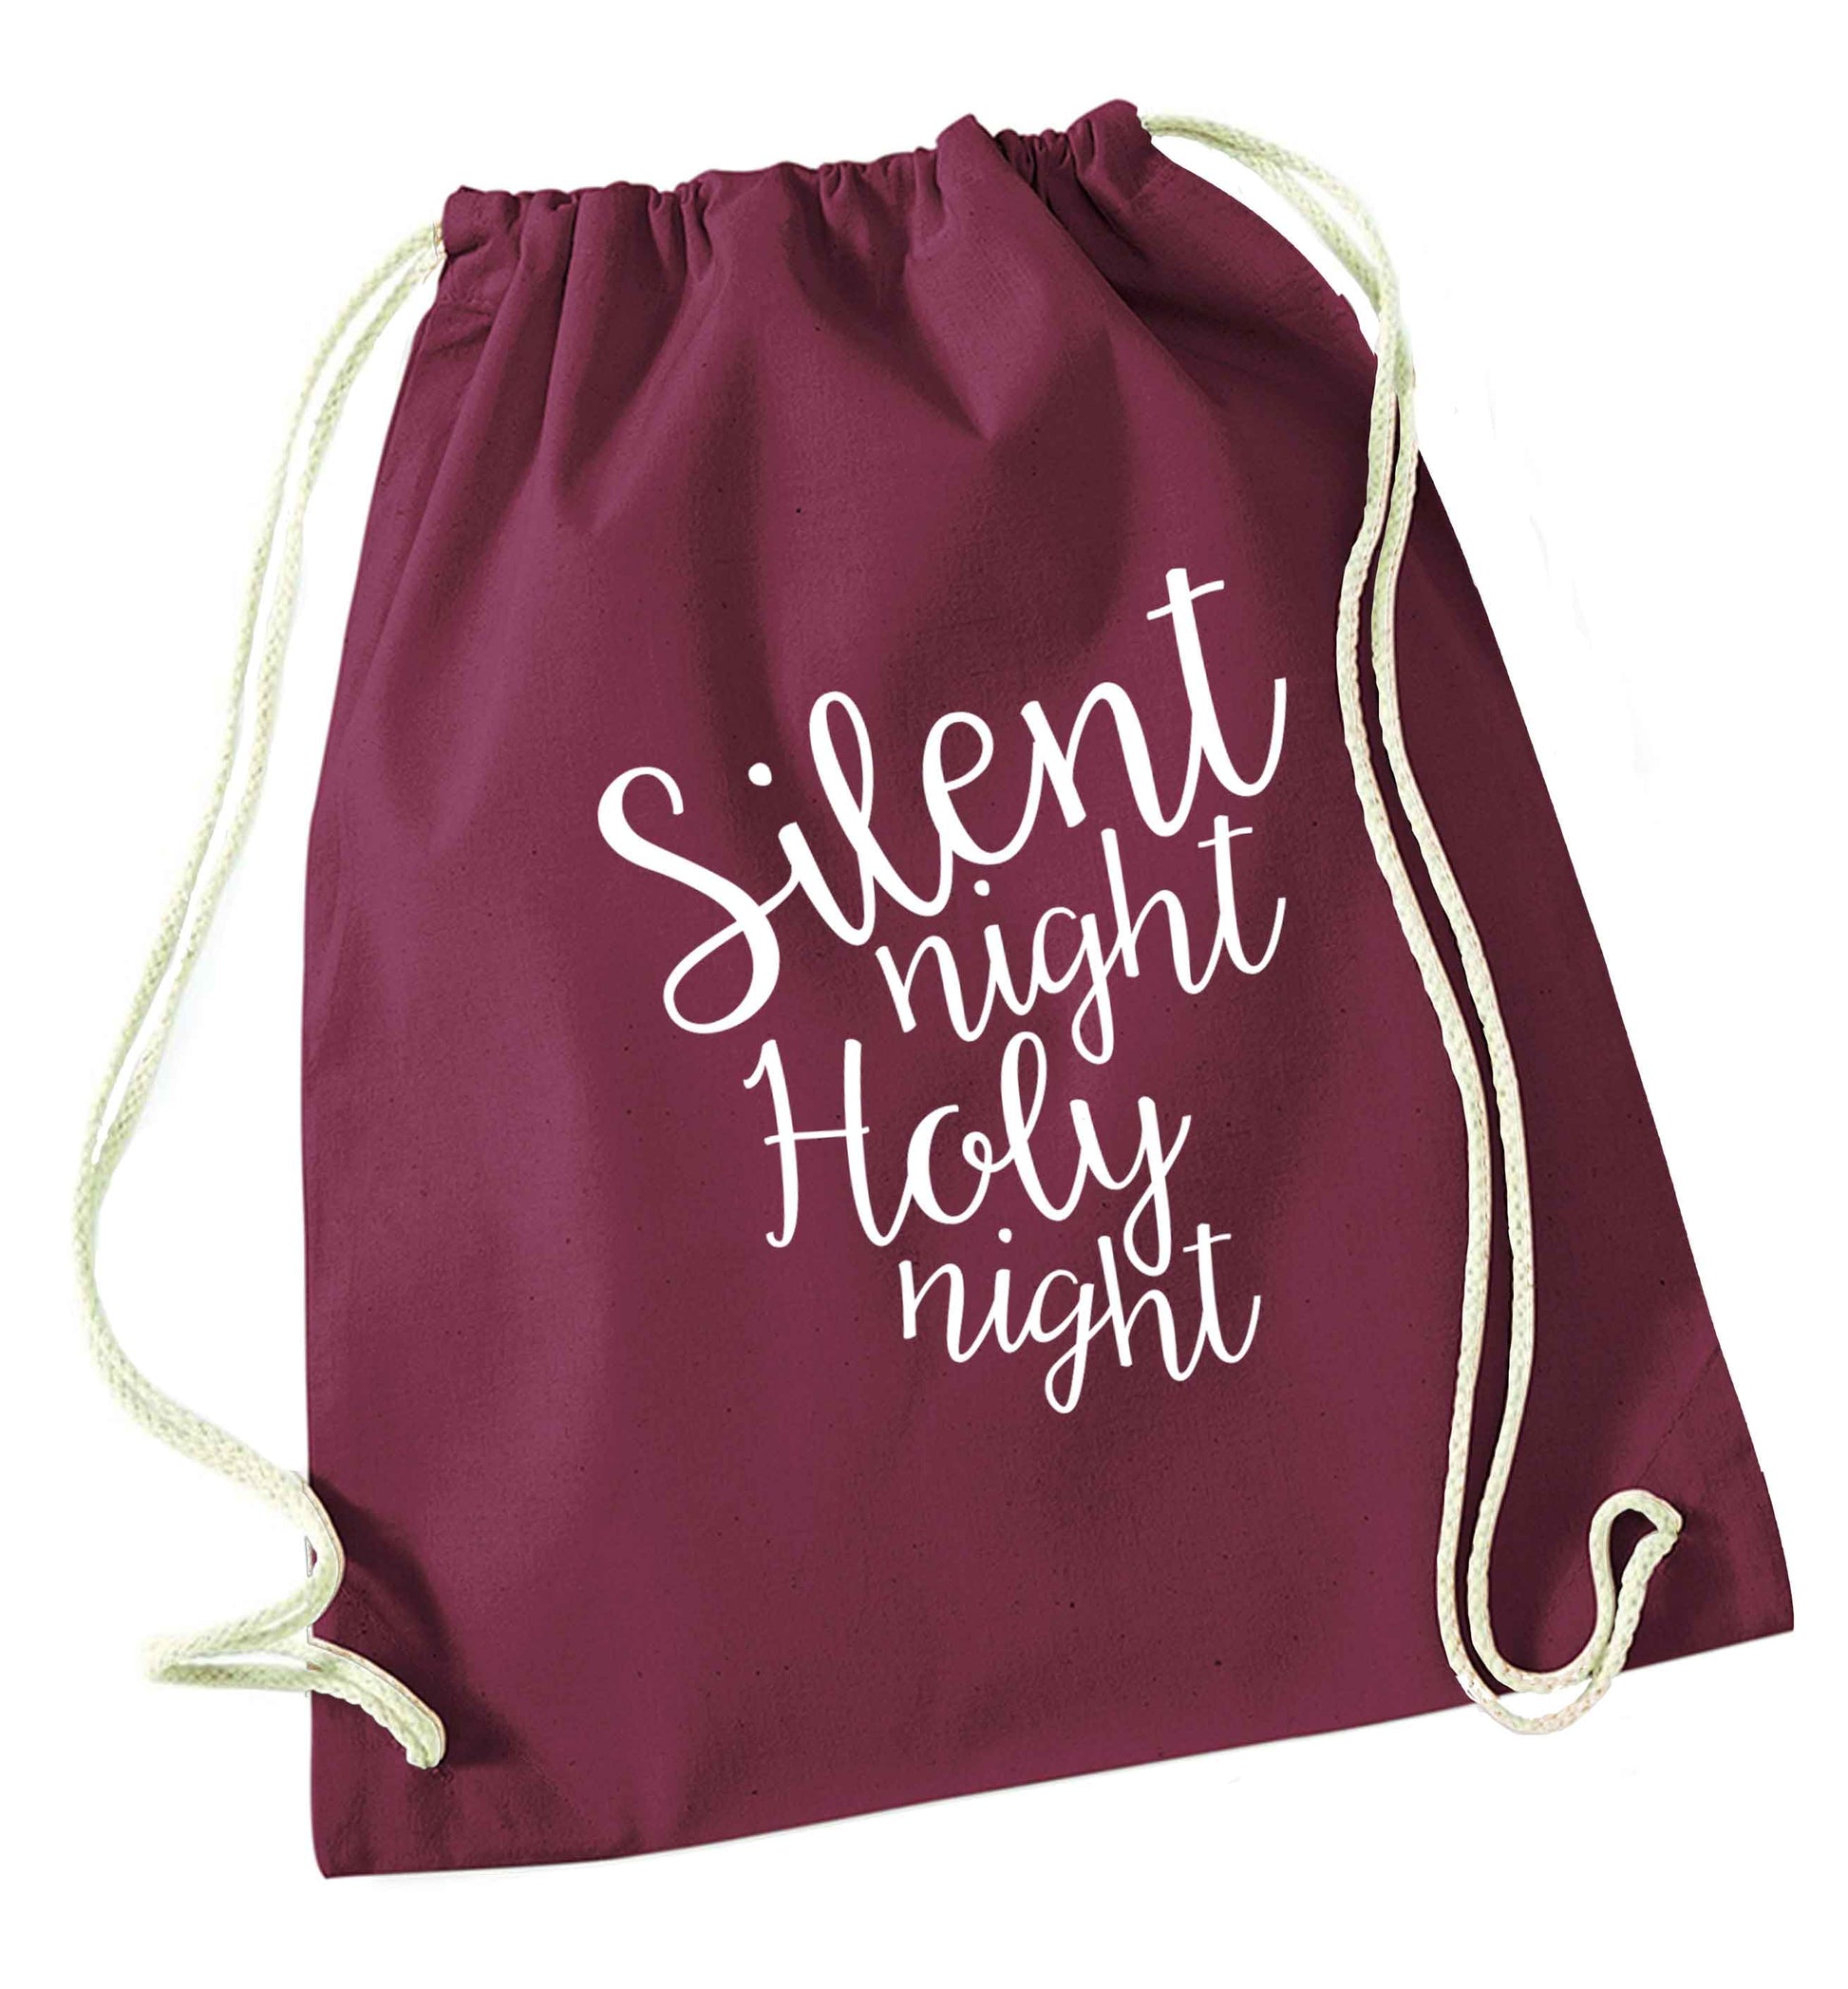 Silent night holy night maroon drawstring bag